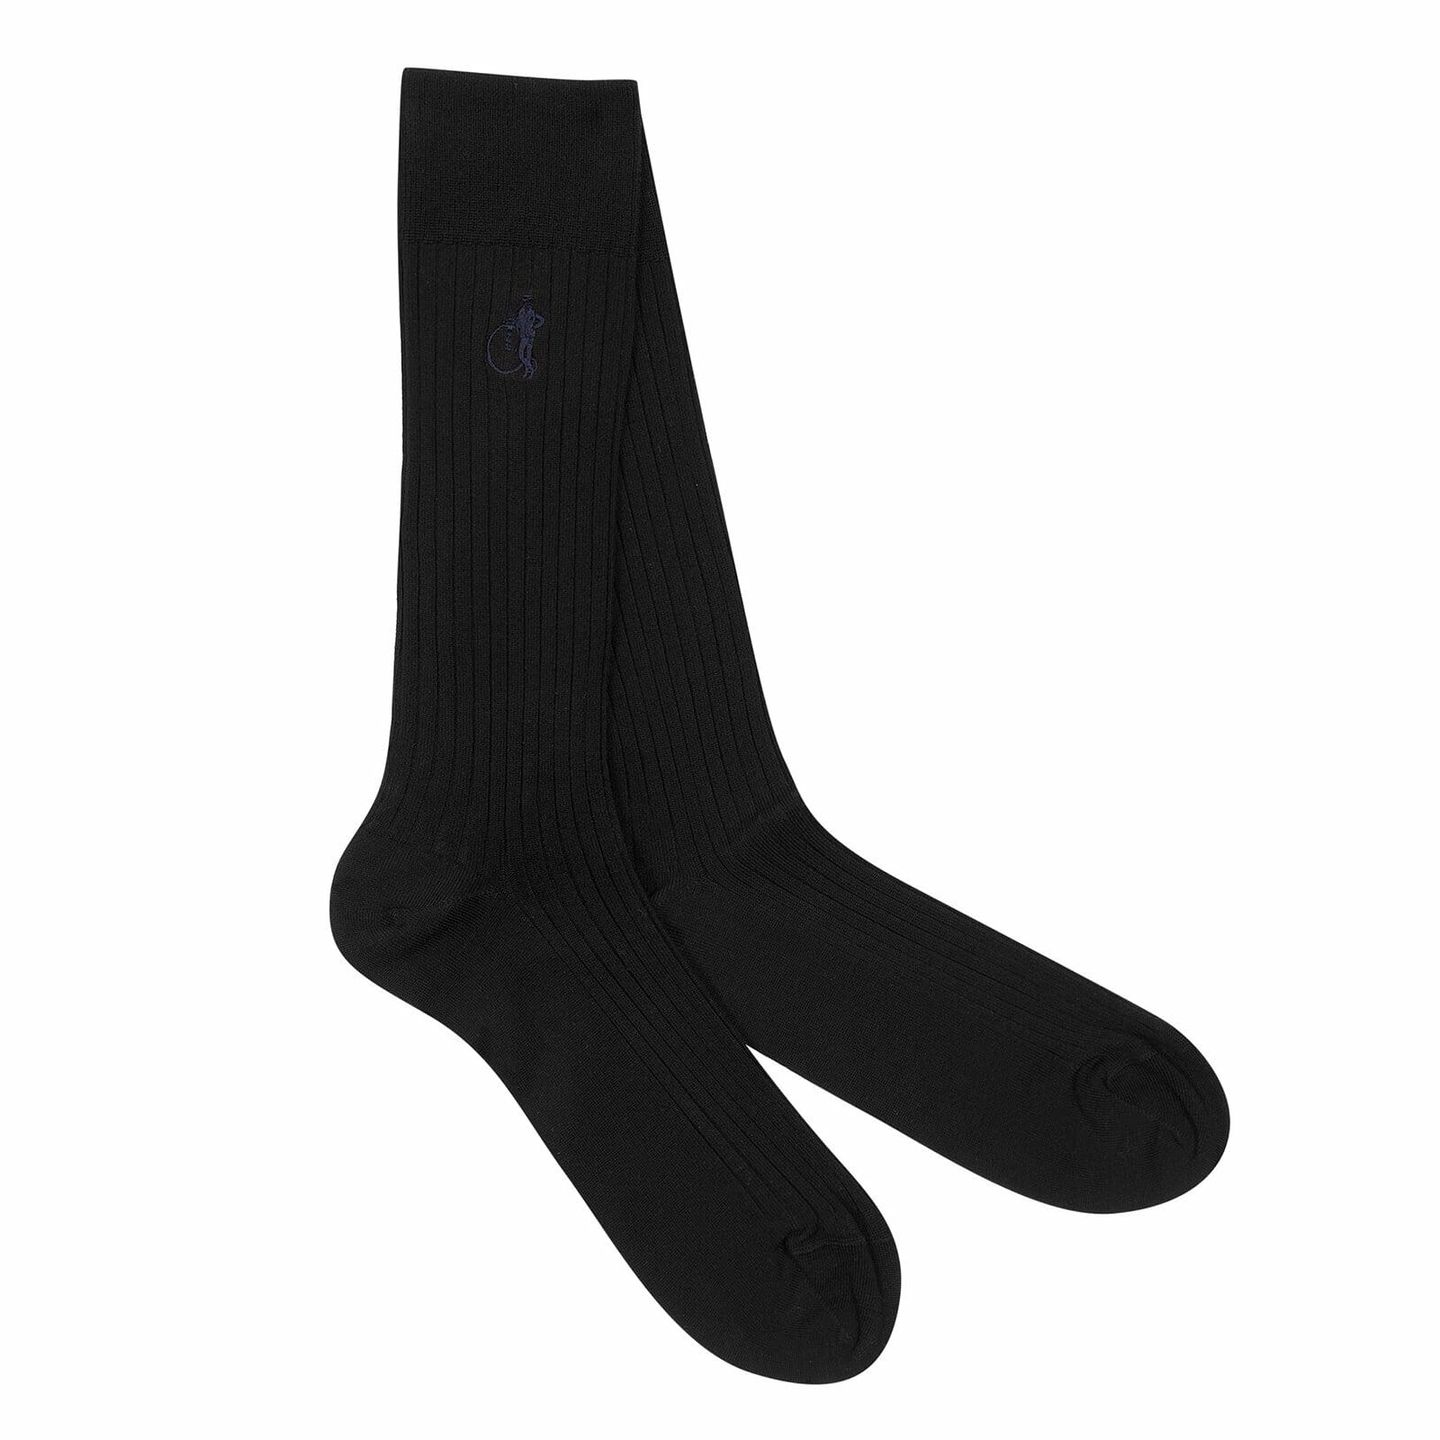 A pair of black socks